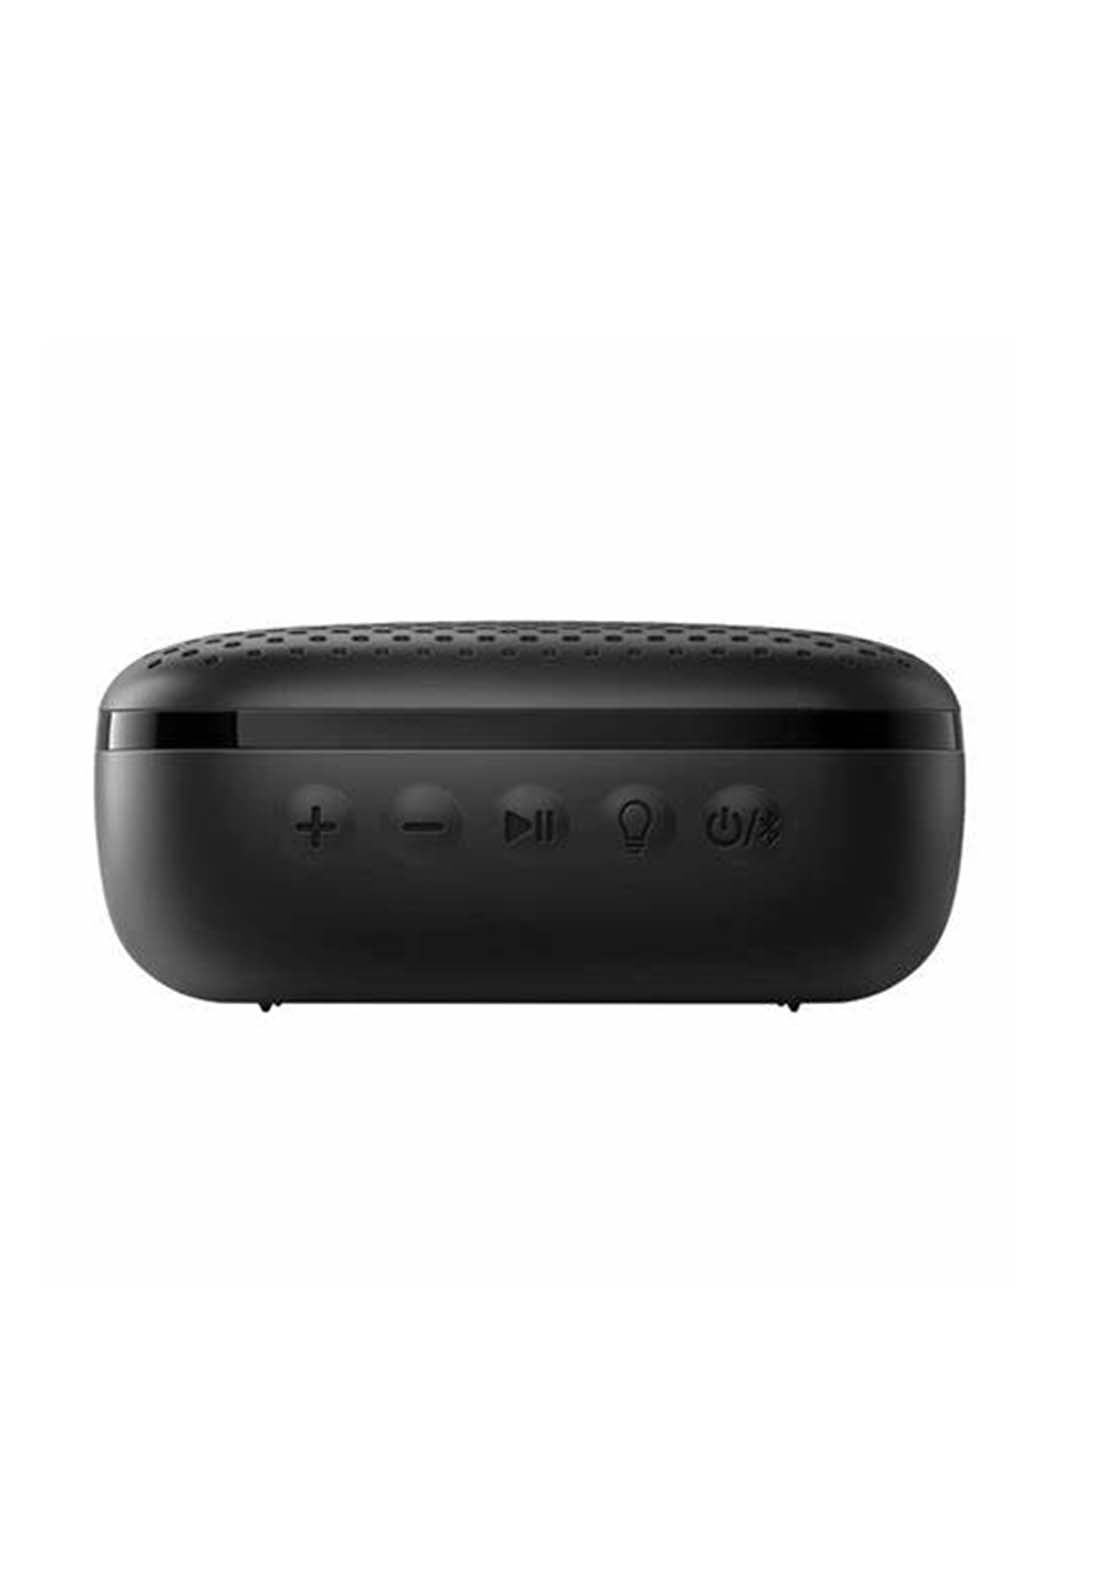 Philips Bluetooth Speaker | Tas2505B00 3 Shaws Department Stores